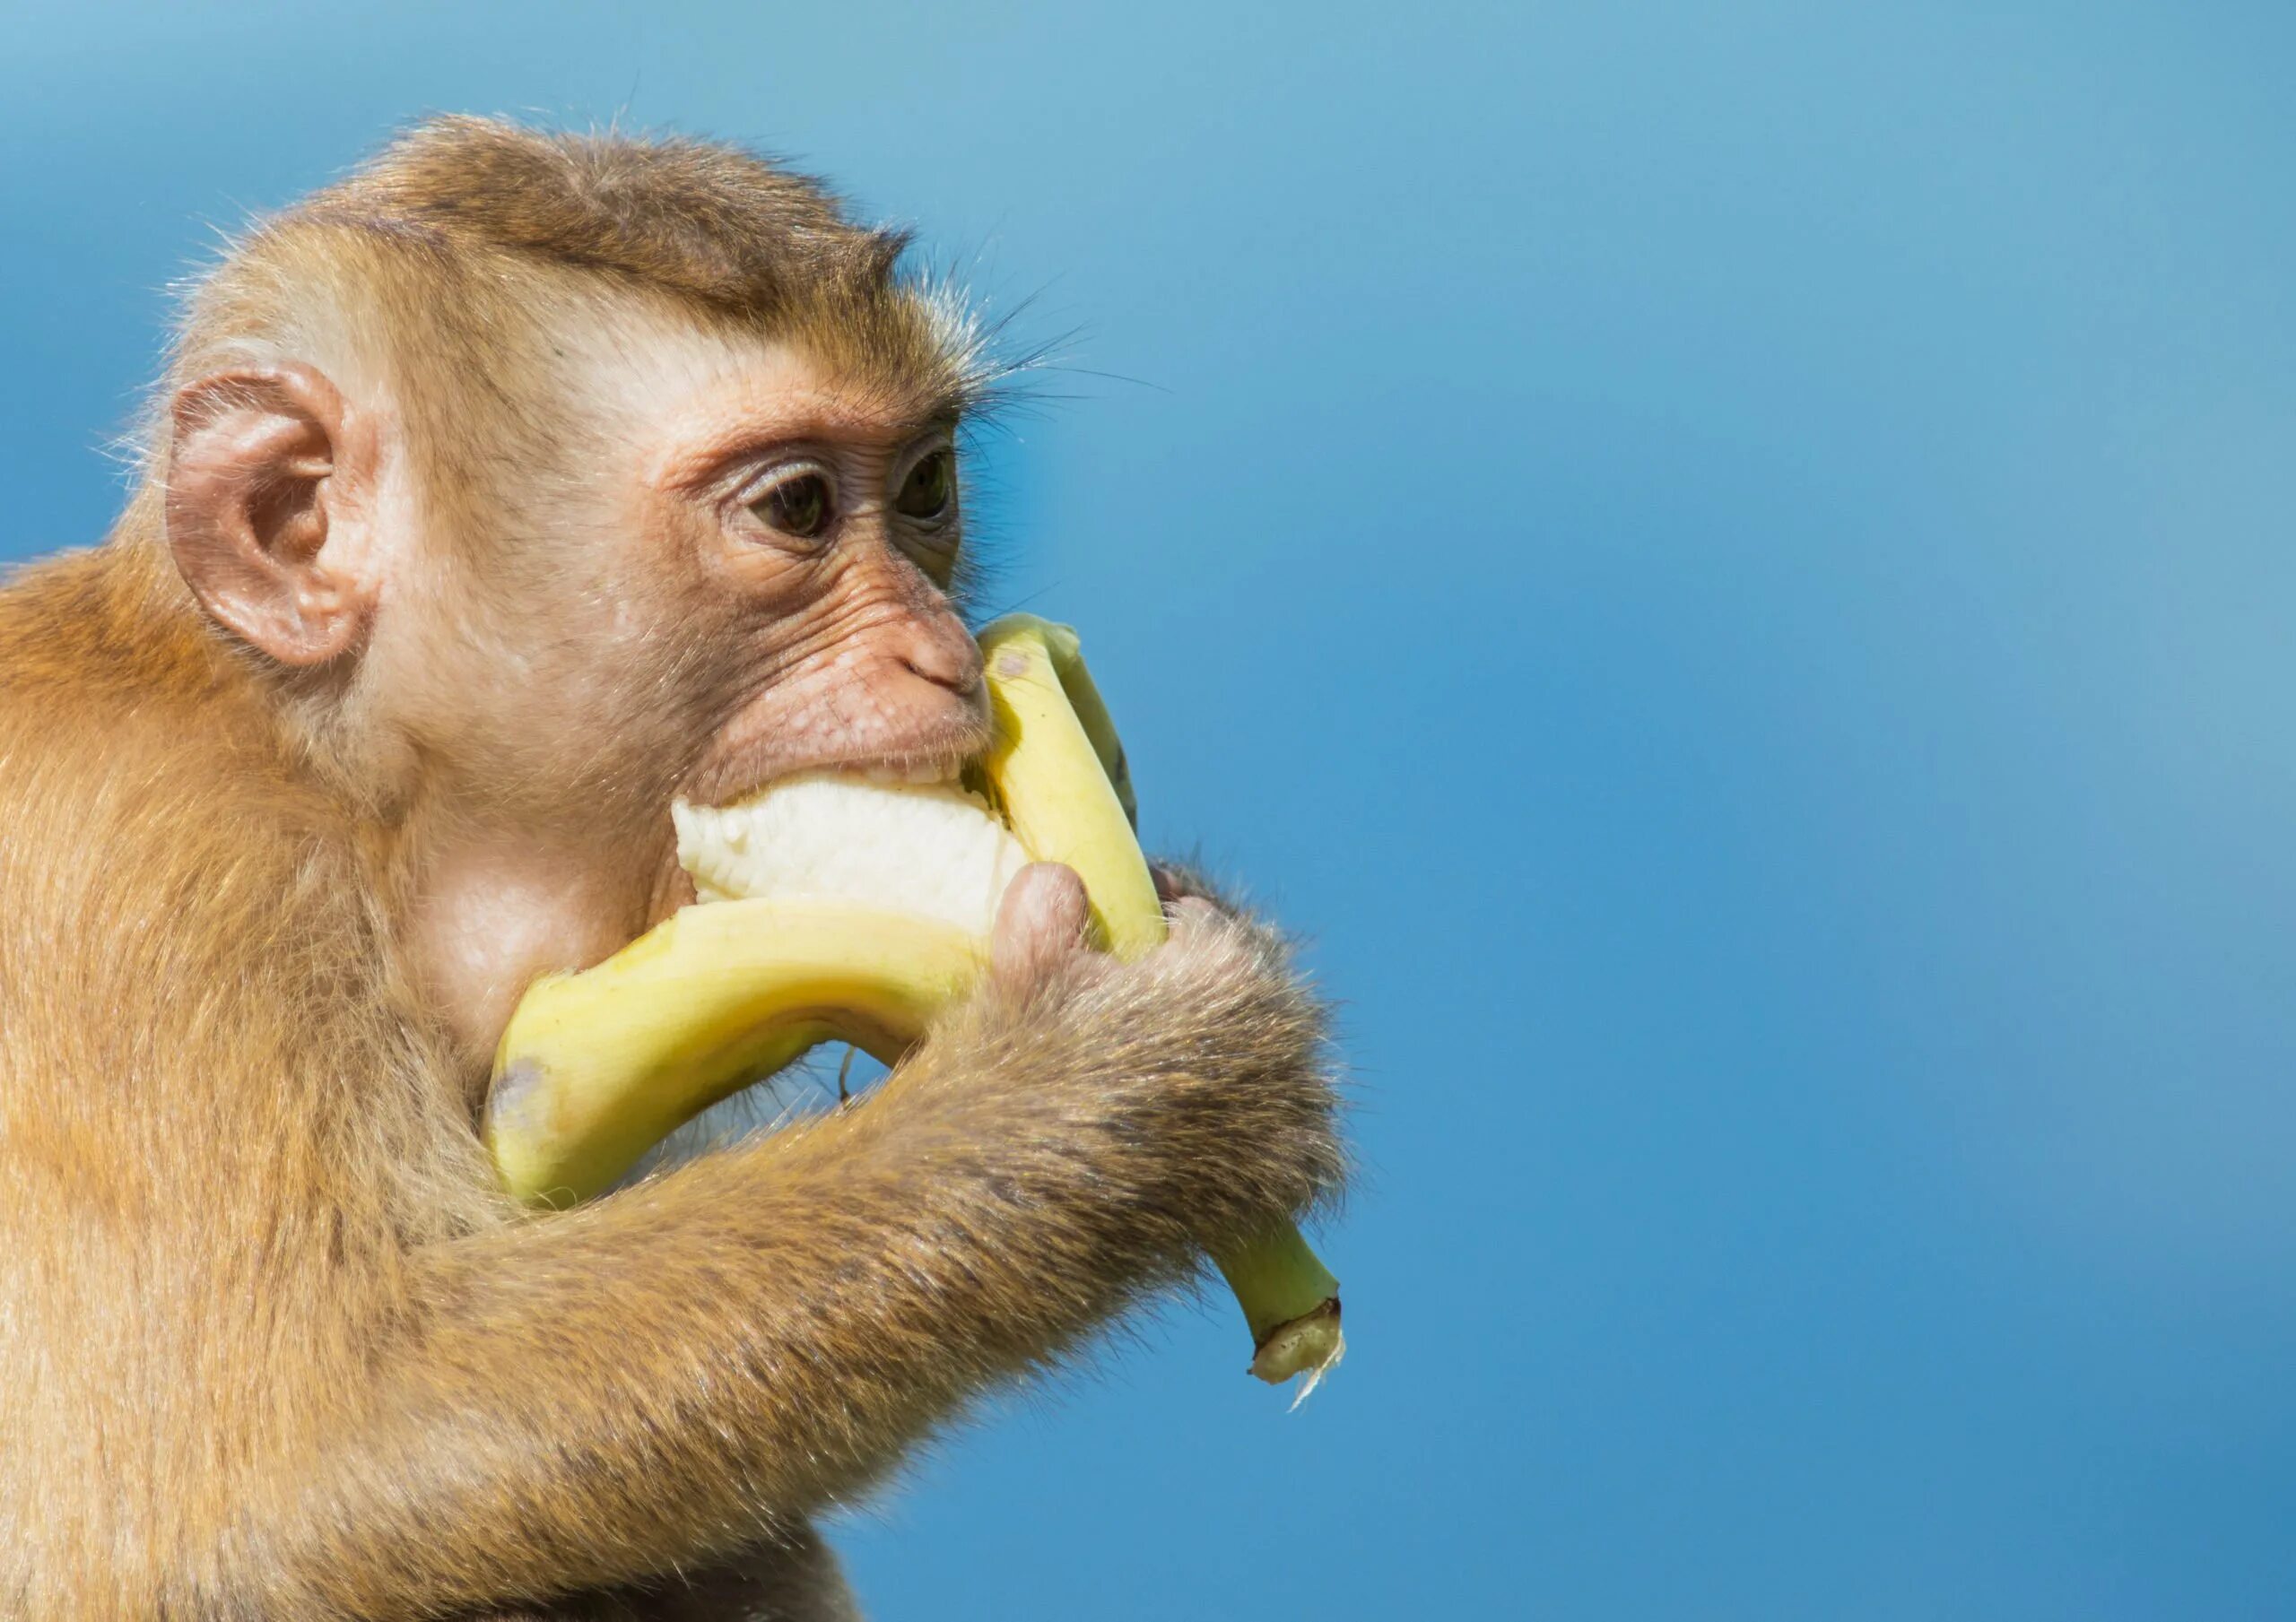 Макака с бананом. Обезьяна кушает банан. J,tpmzyf c ,fuyfyfvb. Фото обезьяны с бананом. От улыбки обезьяна подавилася бананом